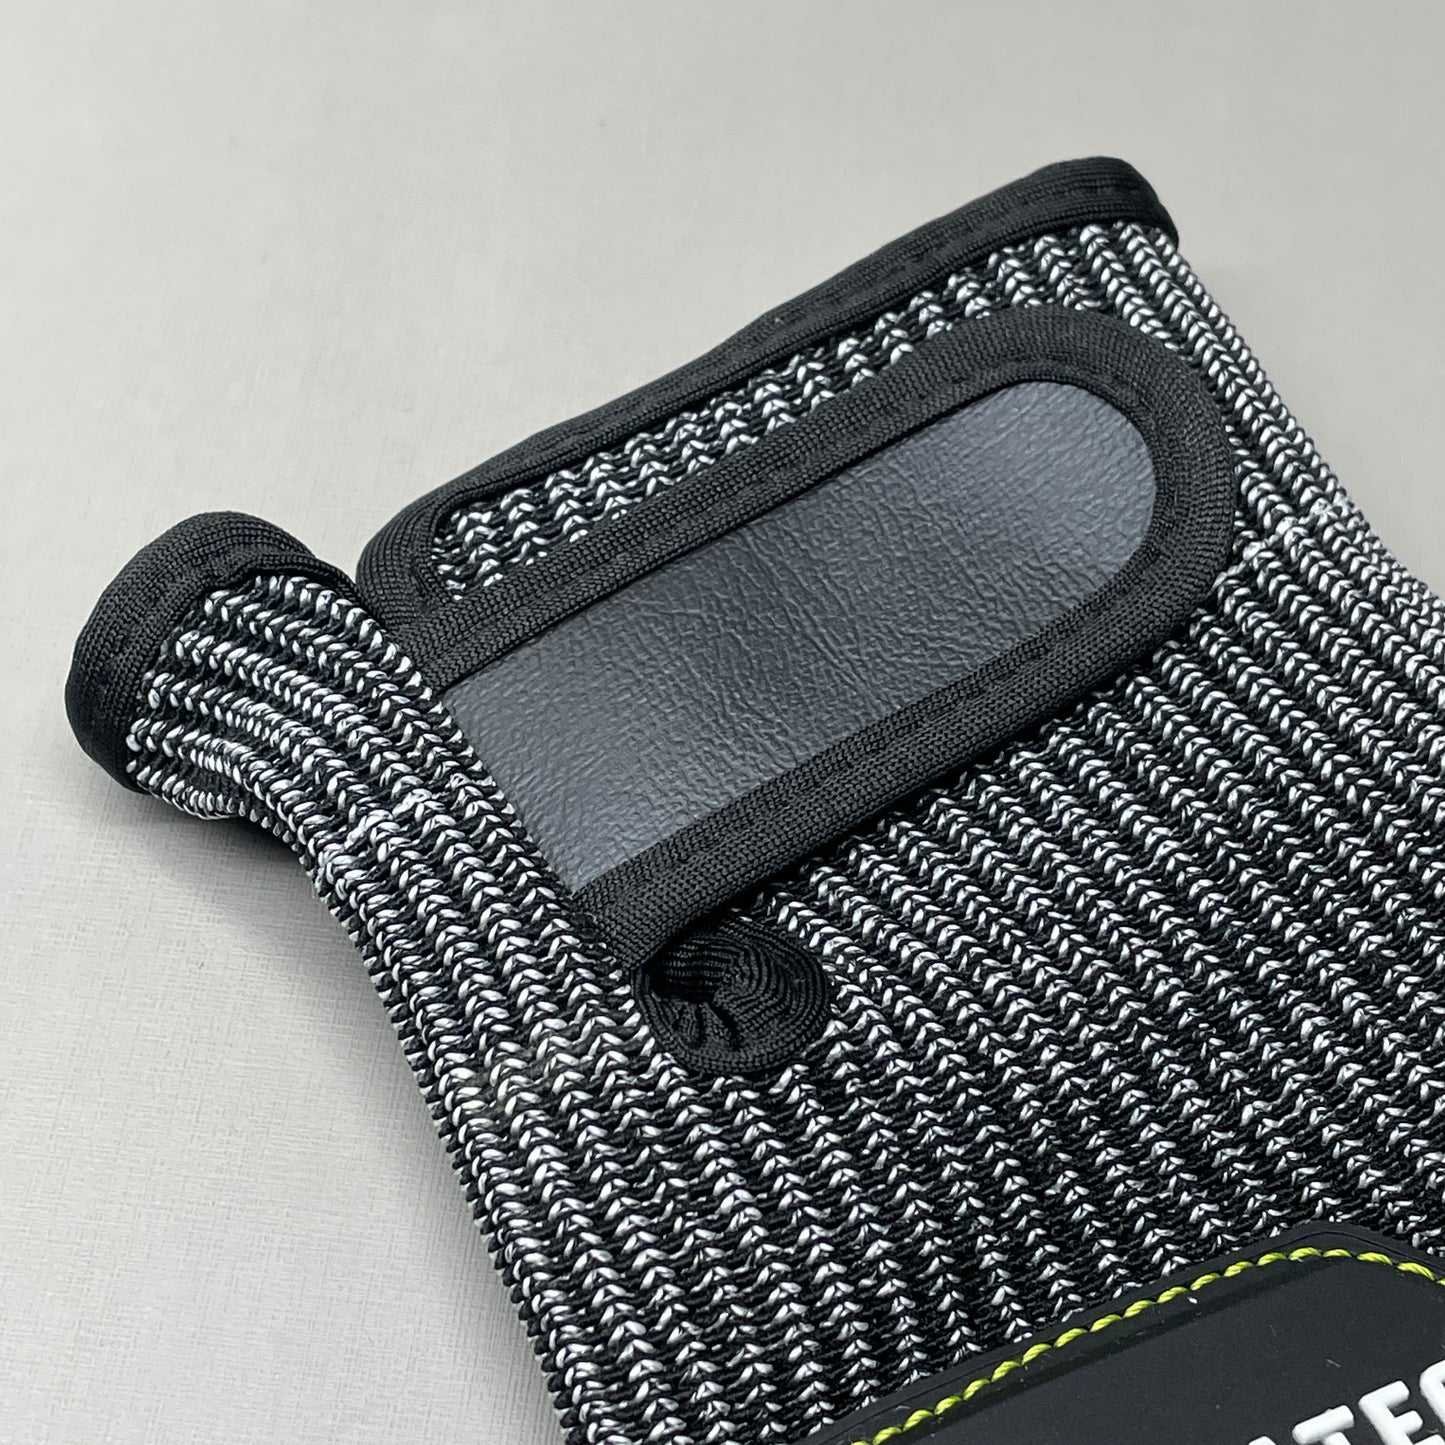 TILSATEC 2-PACK Cut & Puncture Resistant Gloves Sz XL Gray/Green/Black (New)